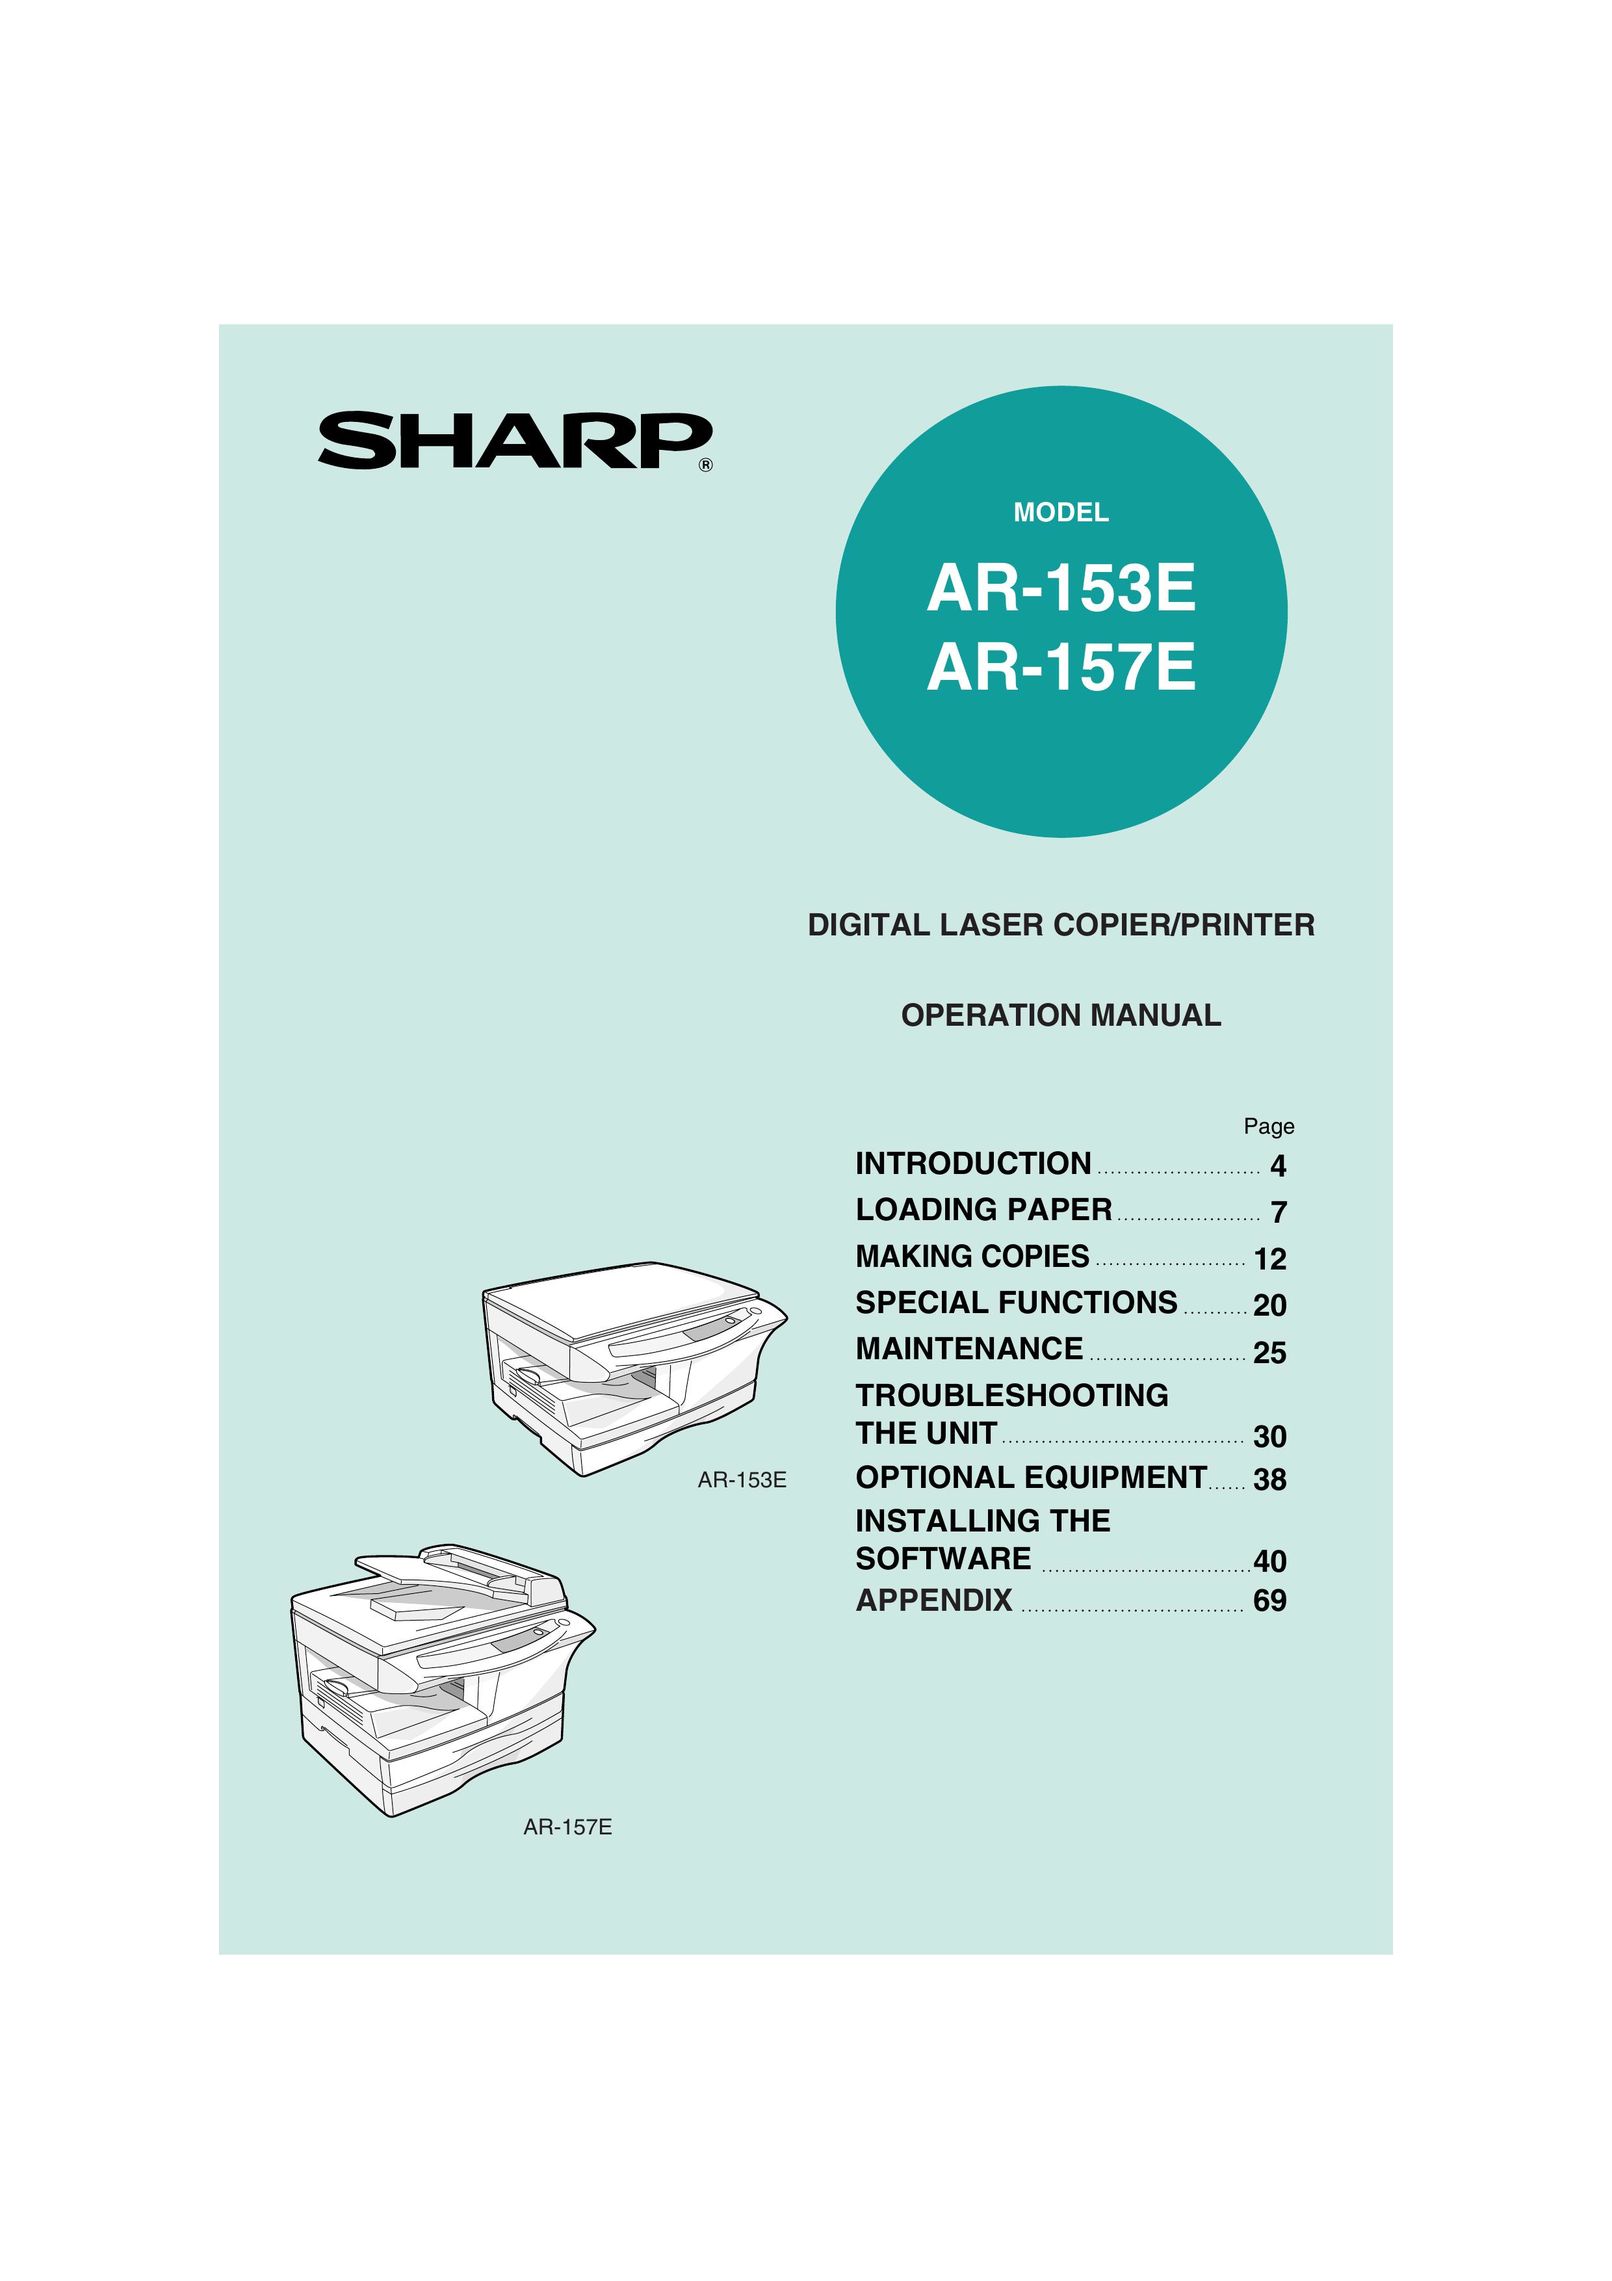 Sharp AR-157E All in One Printer User Manual